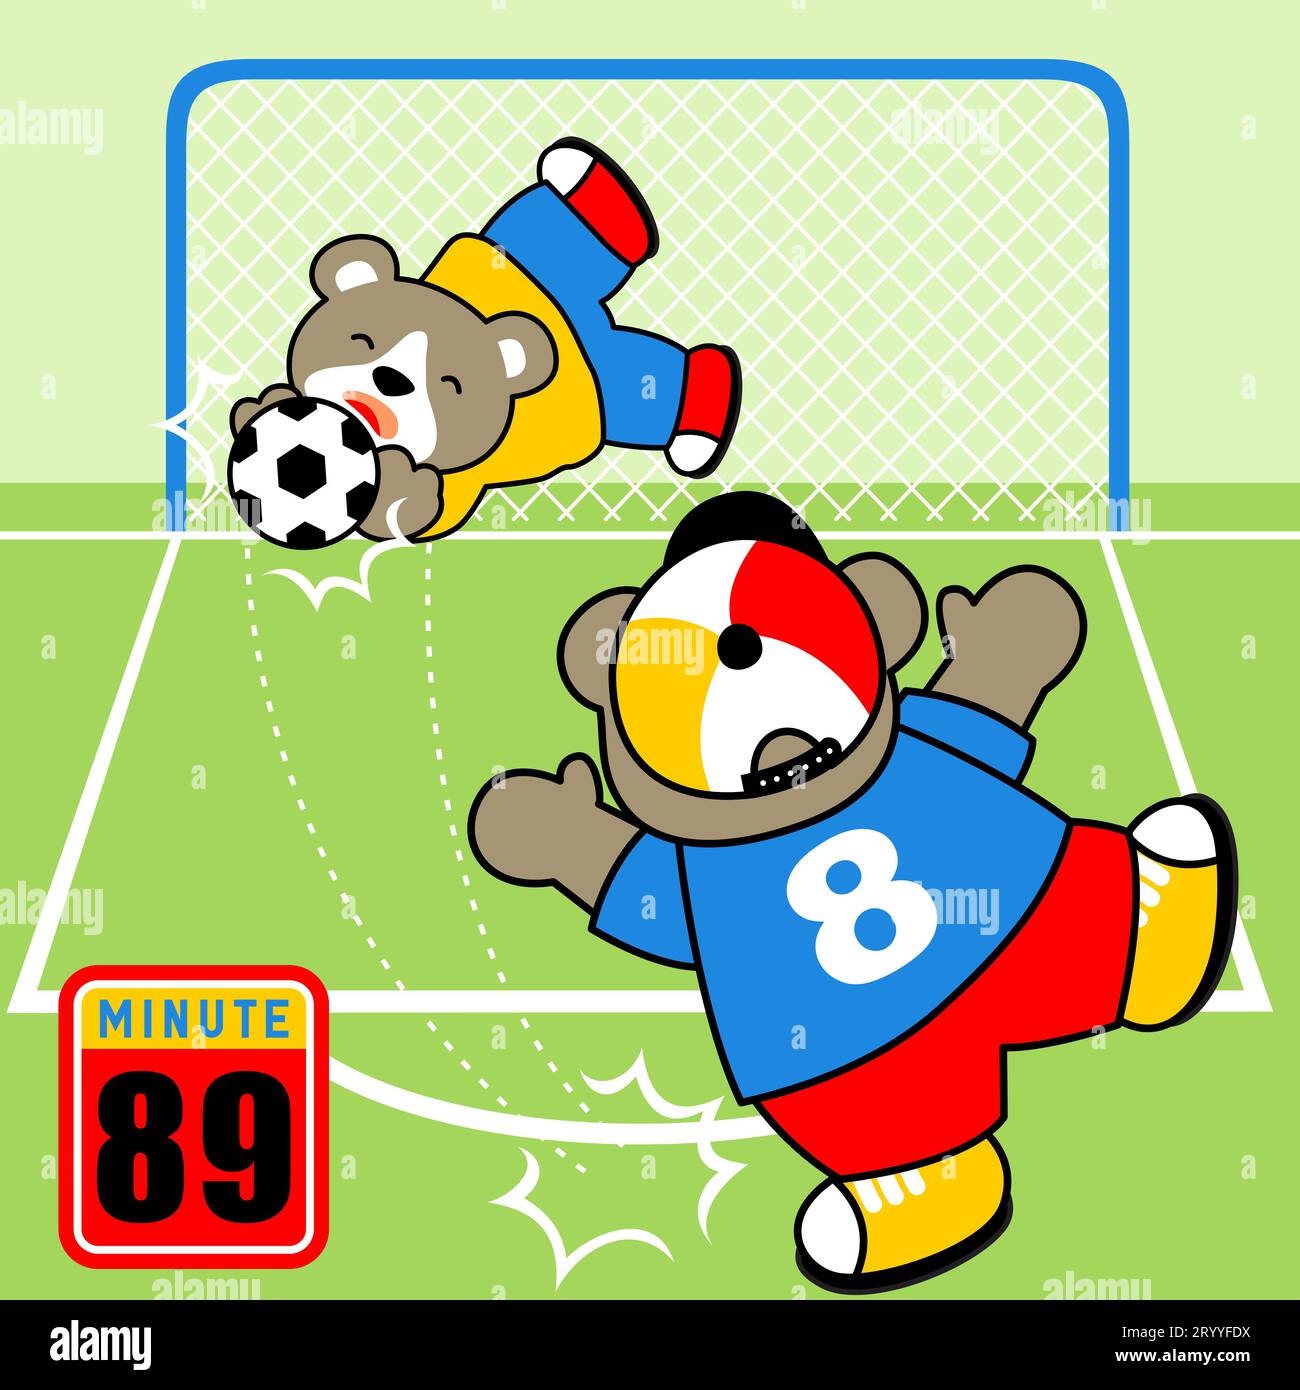 little bears cartoon playing soccer Stock Vector